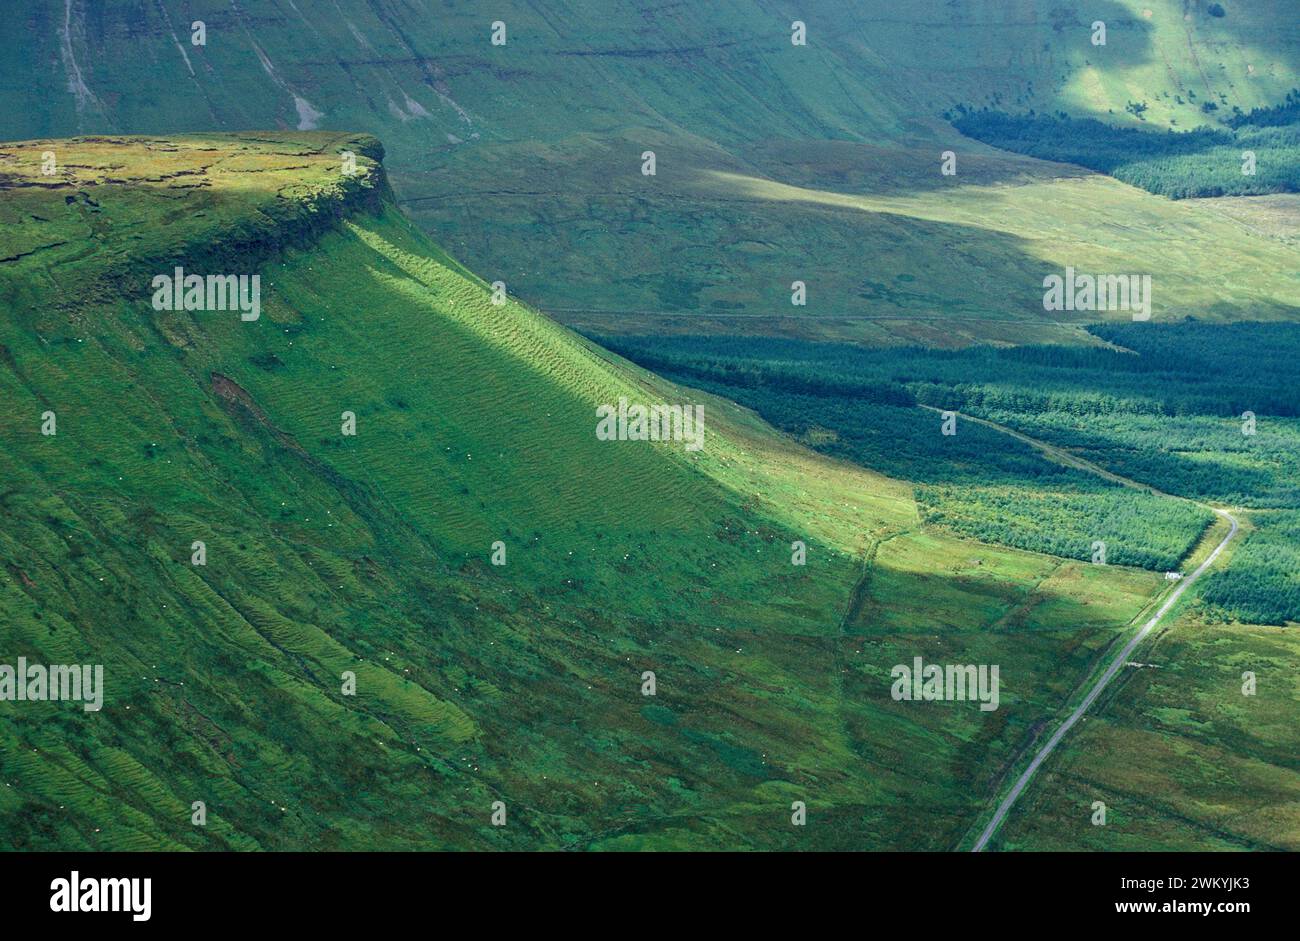 A large green hill, resembling a big wave, near Bundoran in the republic of Ireland. Stock Photo